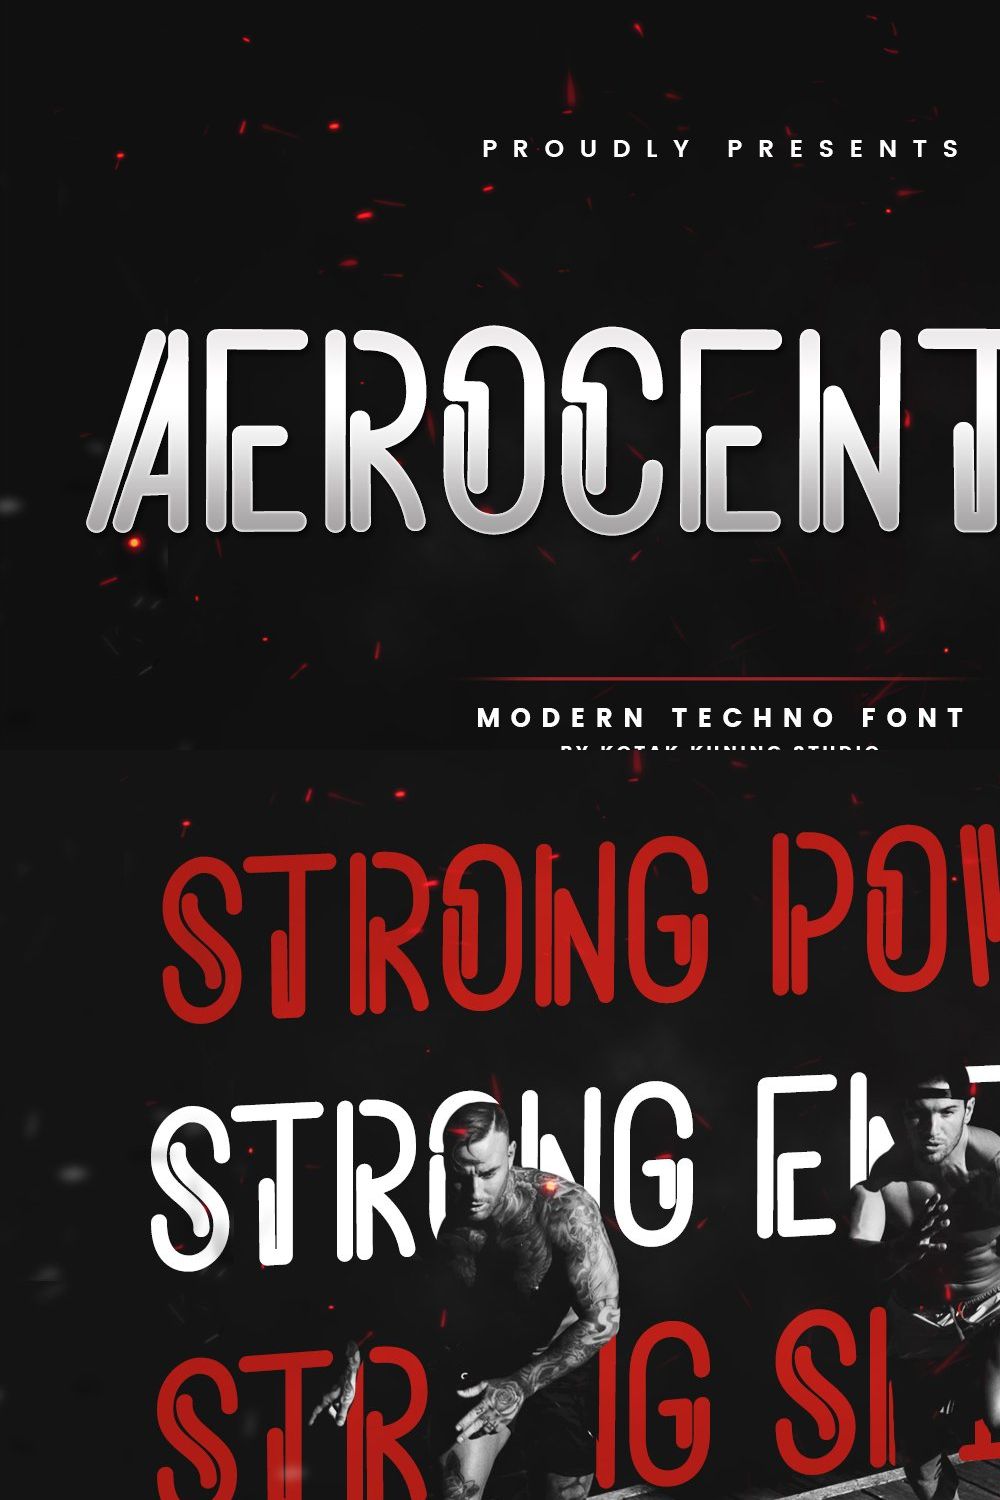 Aerocentrix - Techno Font pinterest preview image.